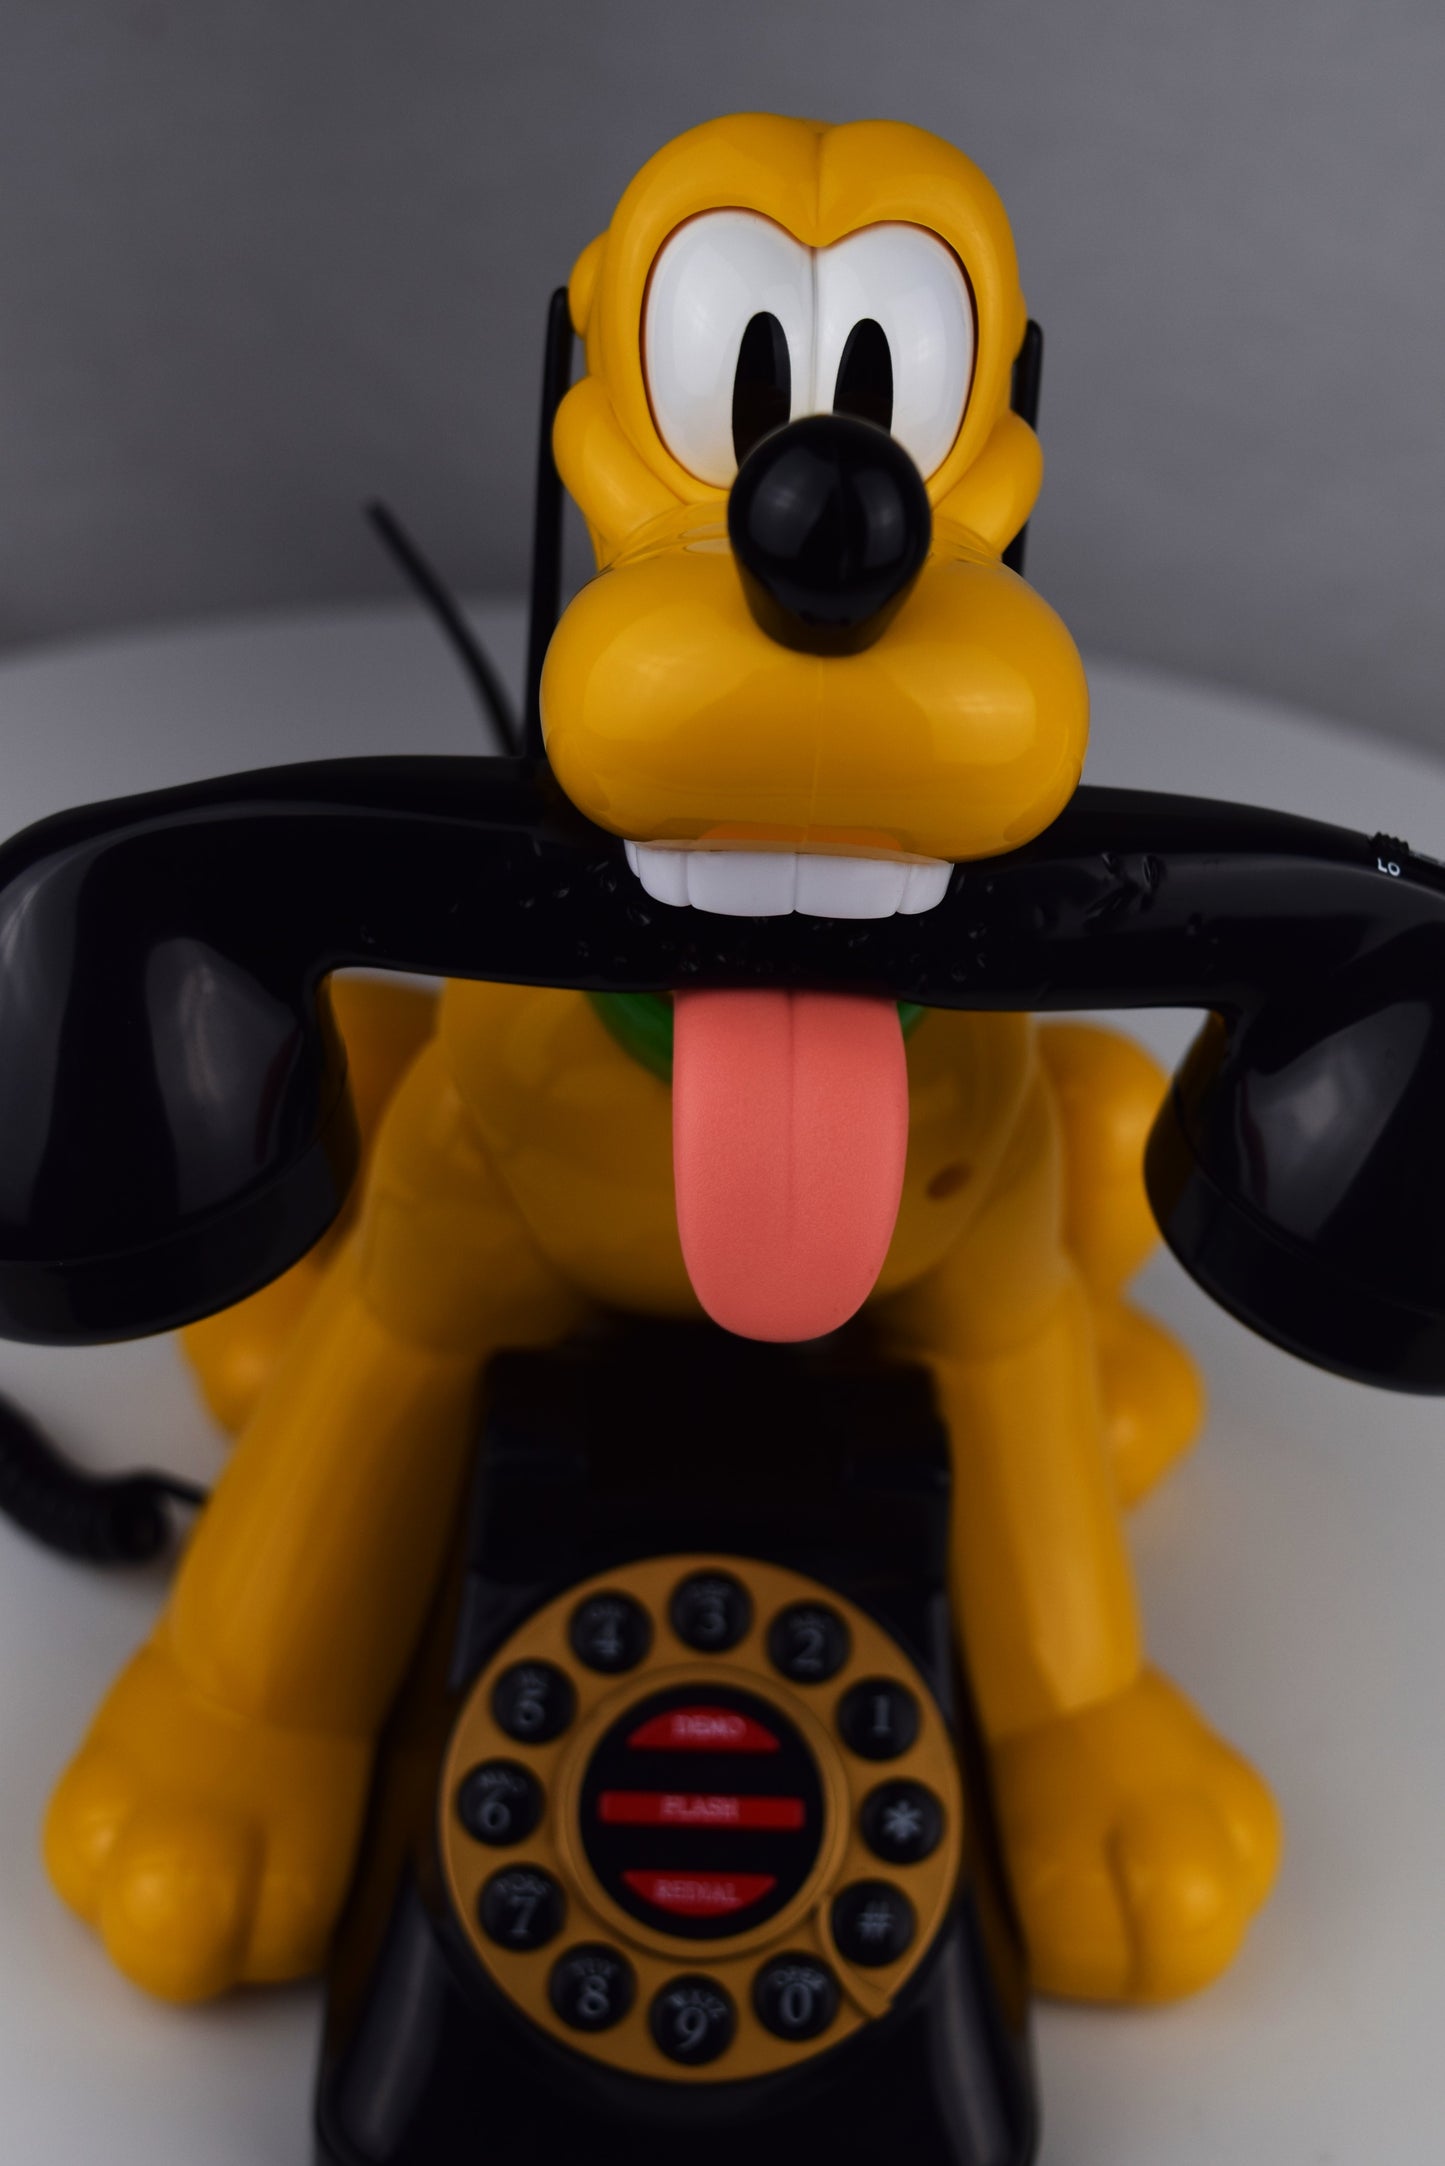 Disney's Pluto Talking Animated Telephone